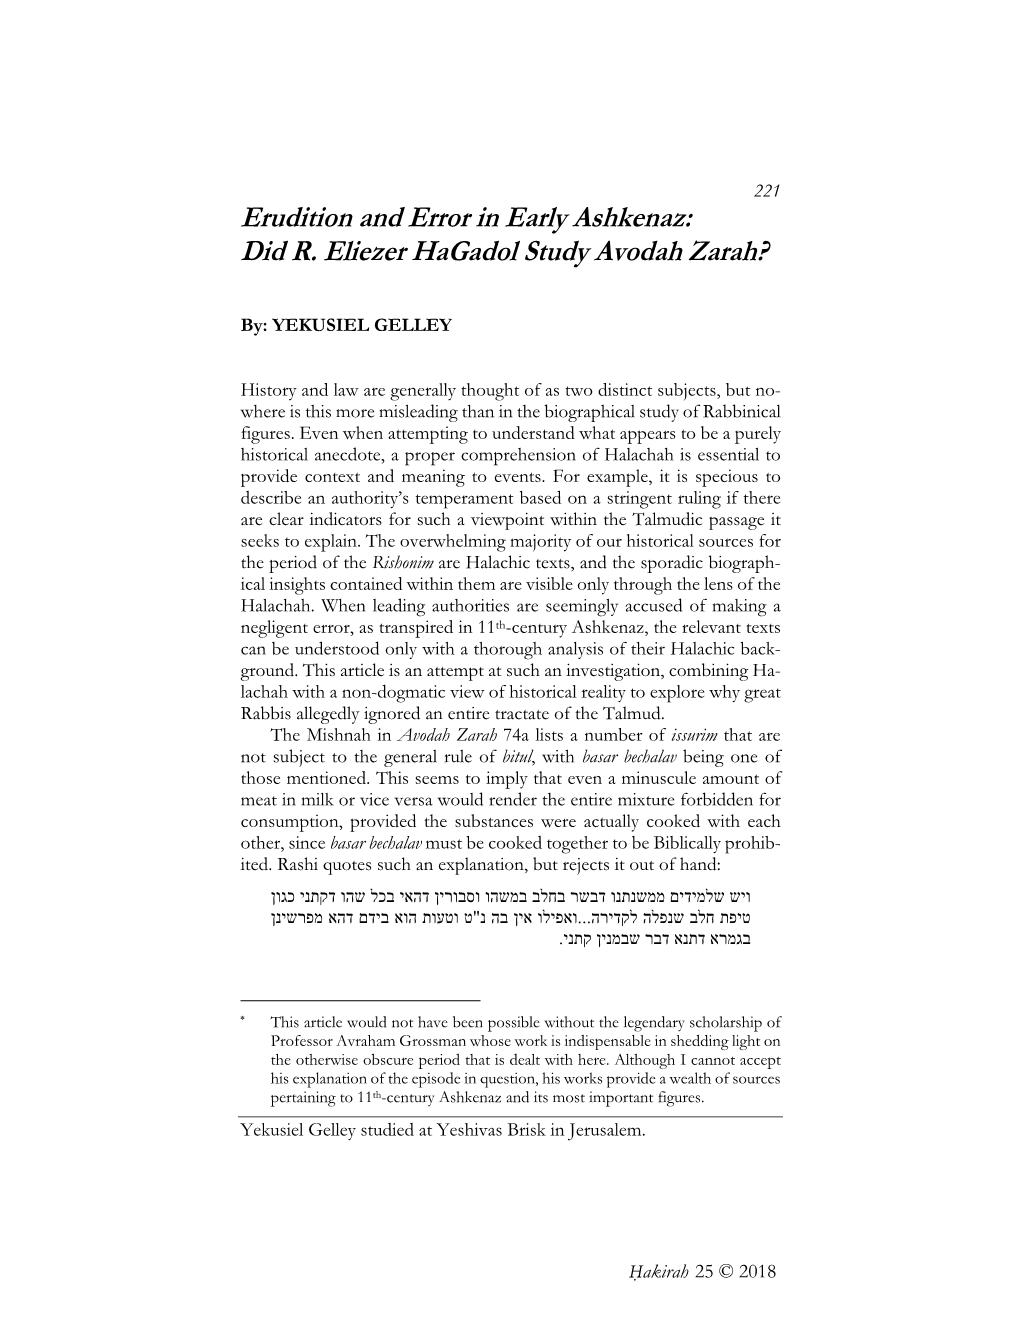 Erudition and Error in Early Ashkenaz: Did R. Eliezer Hagadol Study Avodah Zarah?*